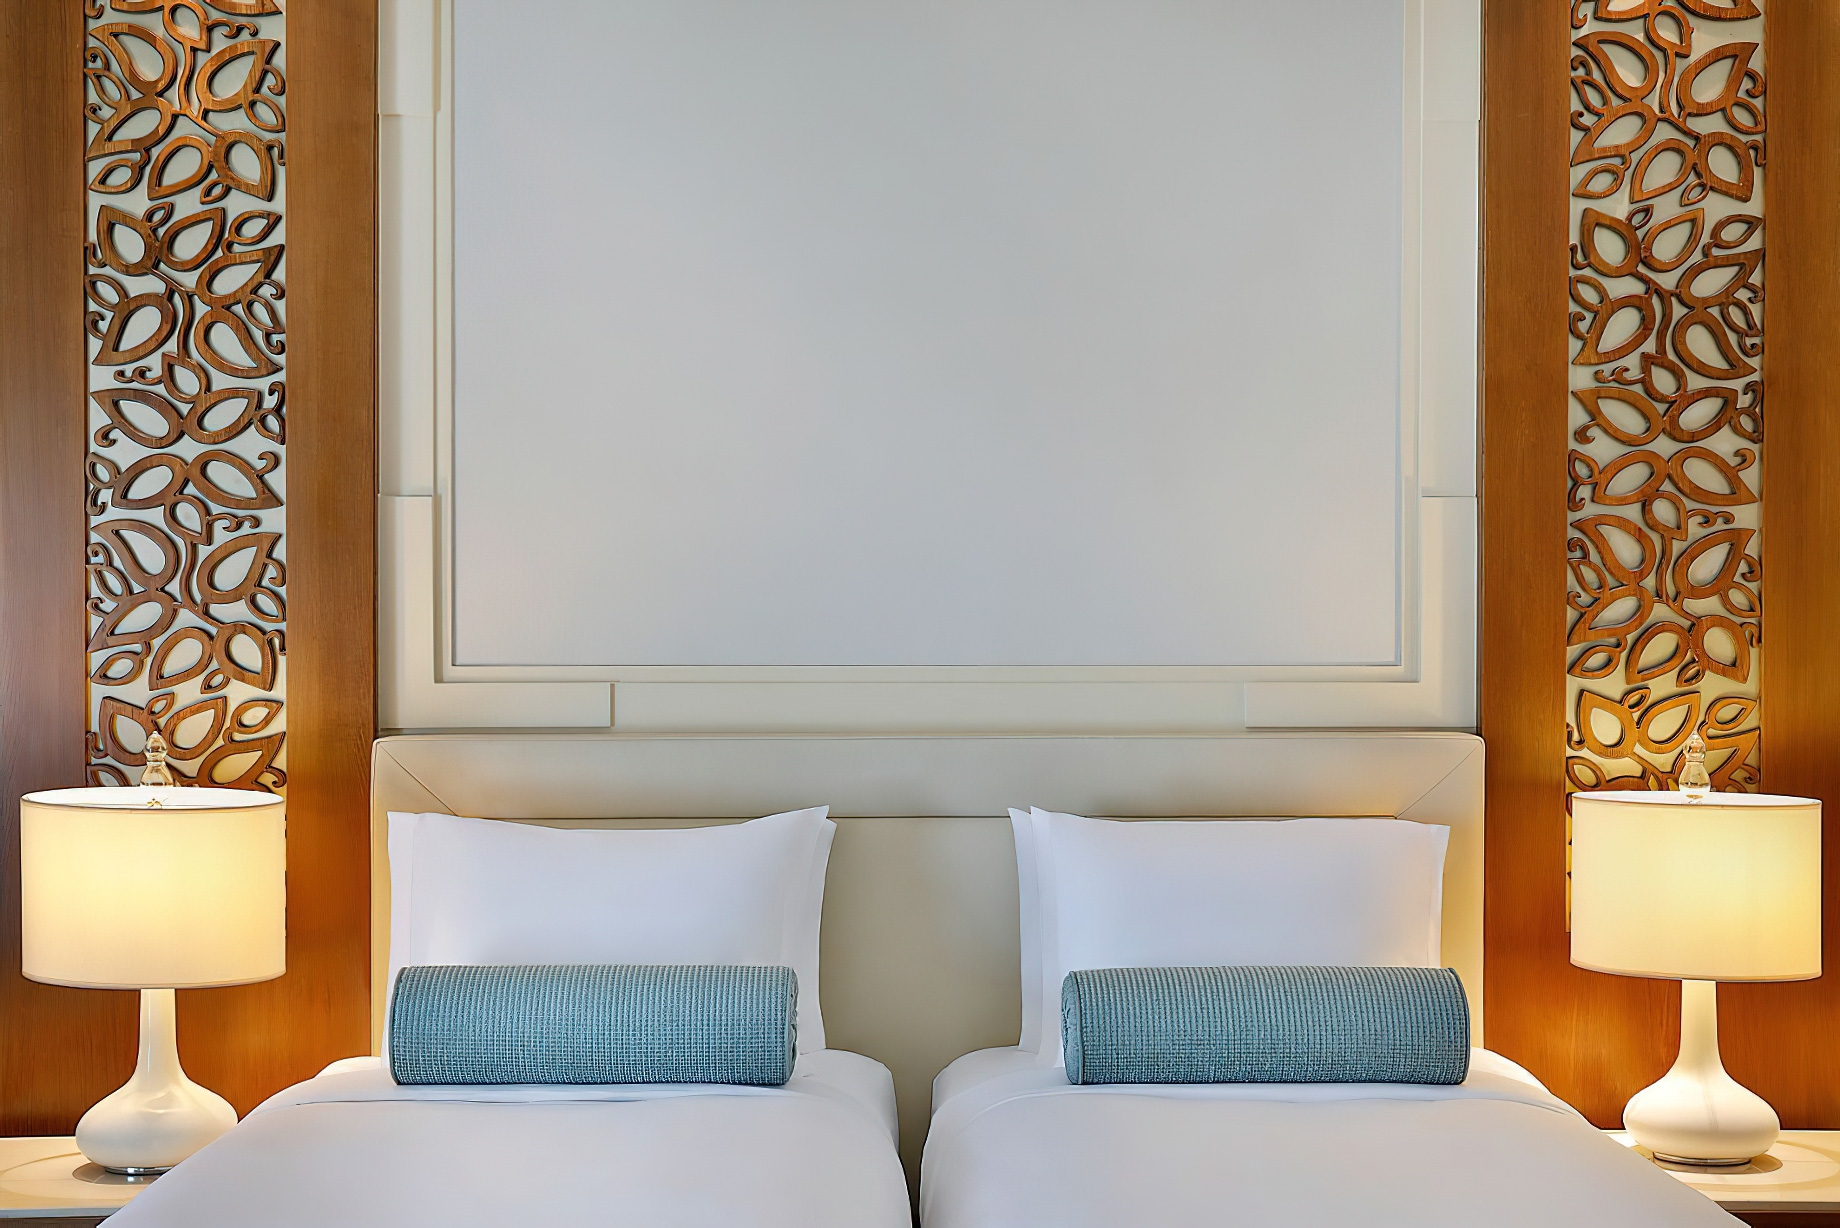 Al Bustan Palace, A Ritz-Carlton Hotel - Muscat, Oman - Executive Suite Sea View Suite Twin Beds